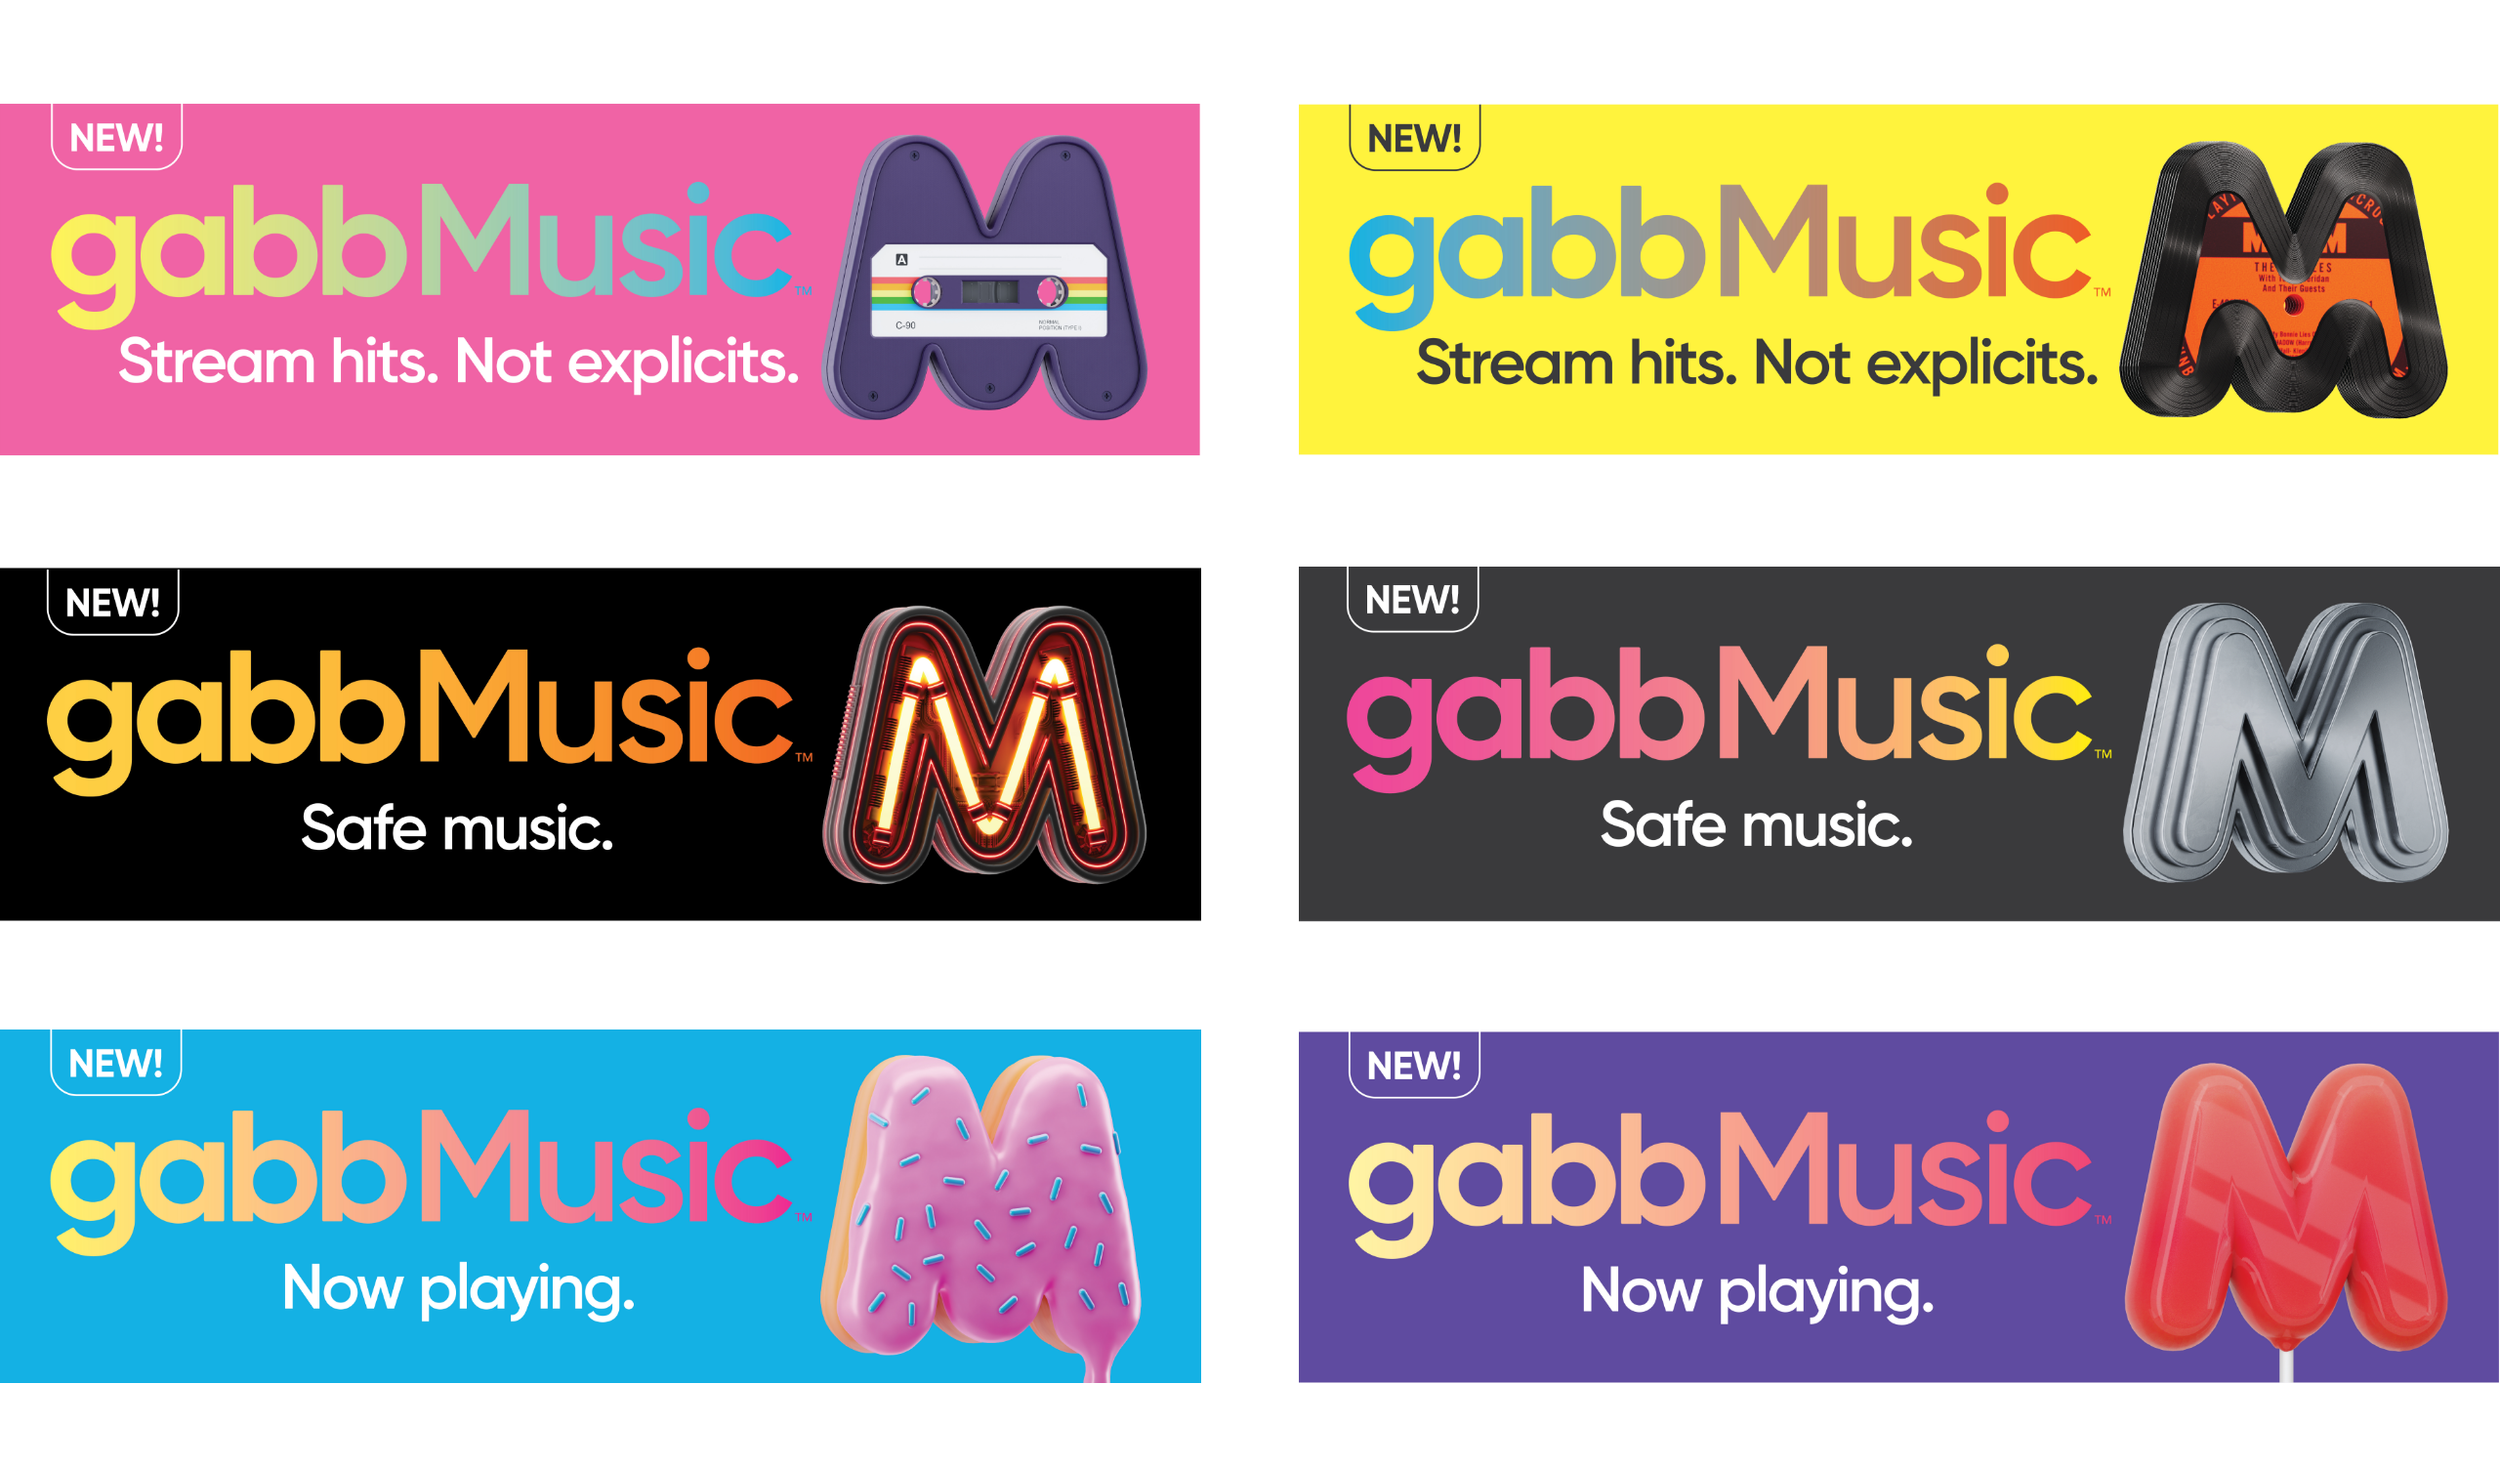 gabb-music-billboards2.png